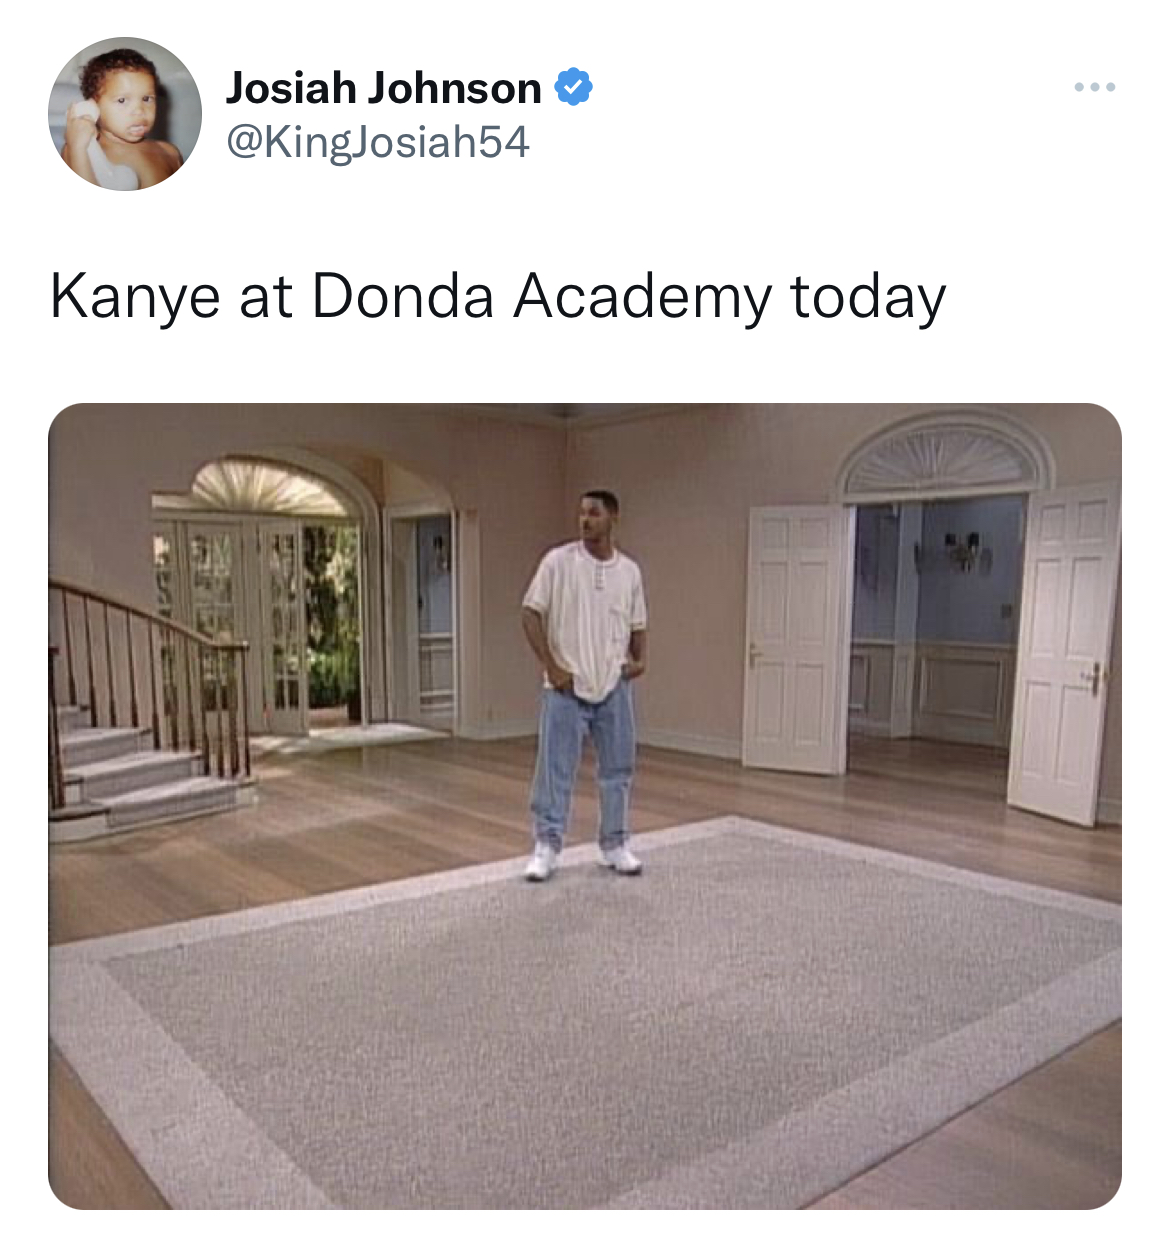 Tweets Roasting Celebs - floor - Josiah Johnson Kanye at Donda Academy today